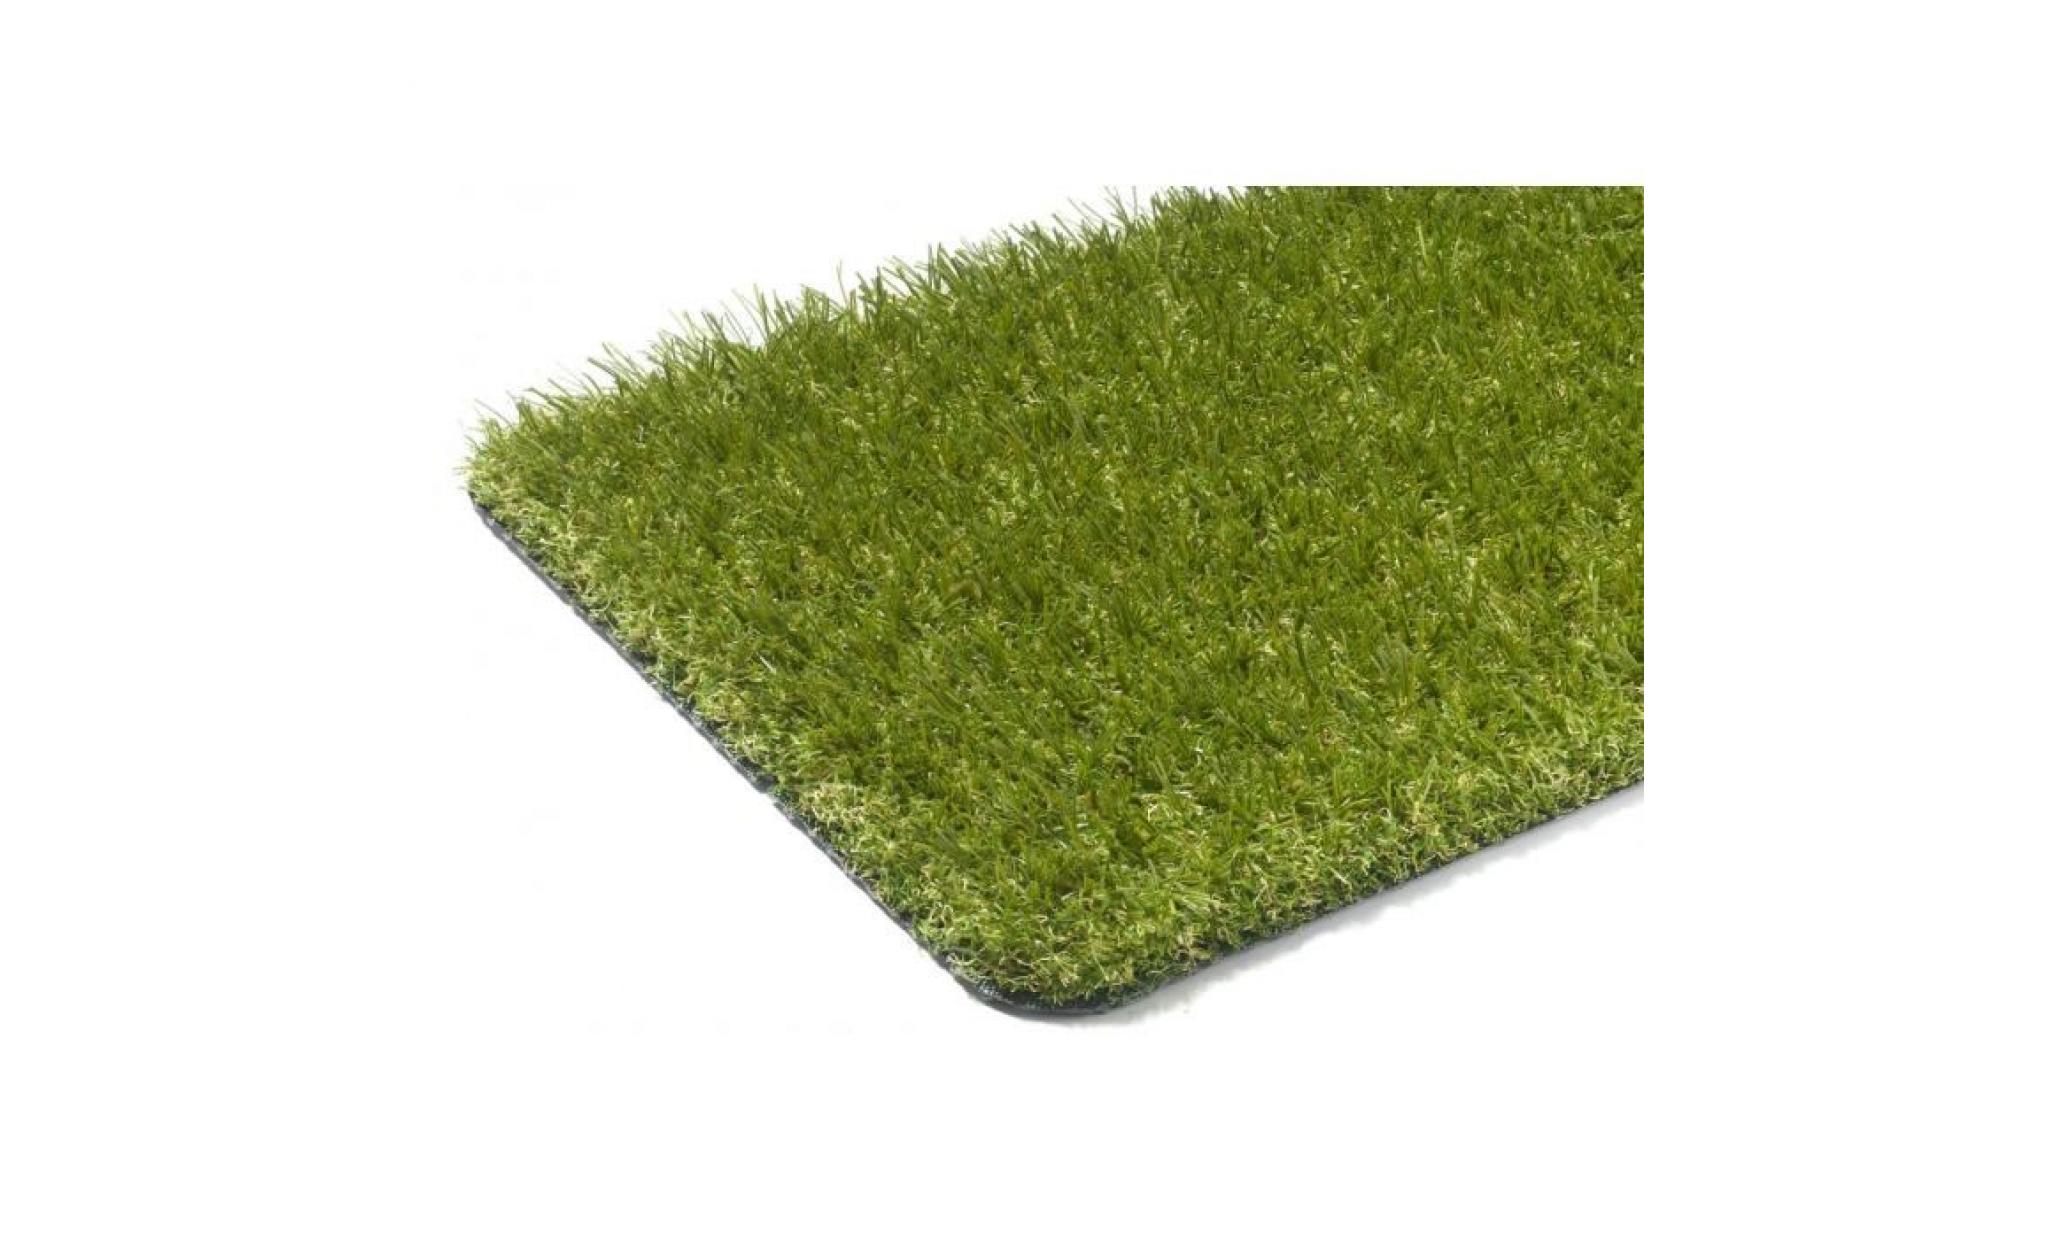 wembley   tapis type luxe gazon artificiel – pour jardin, terrasse, balcon   vert  [200x400 cm]